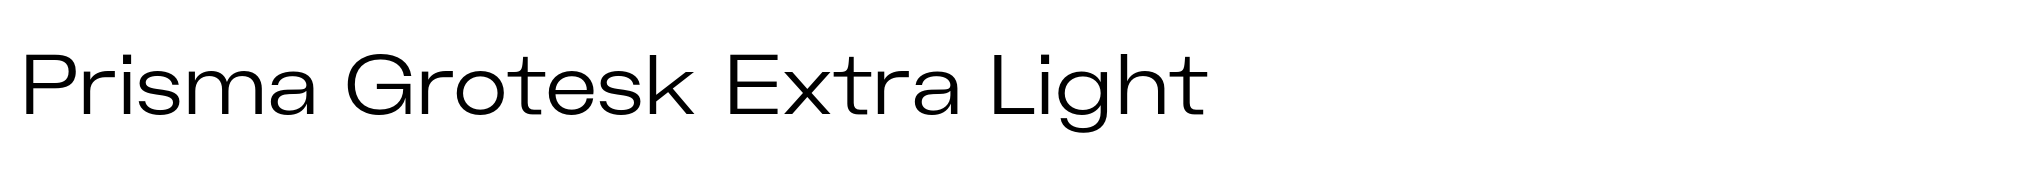 Prisma Grotesk Extra Light image